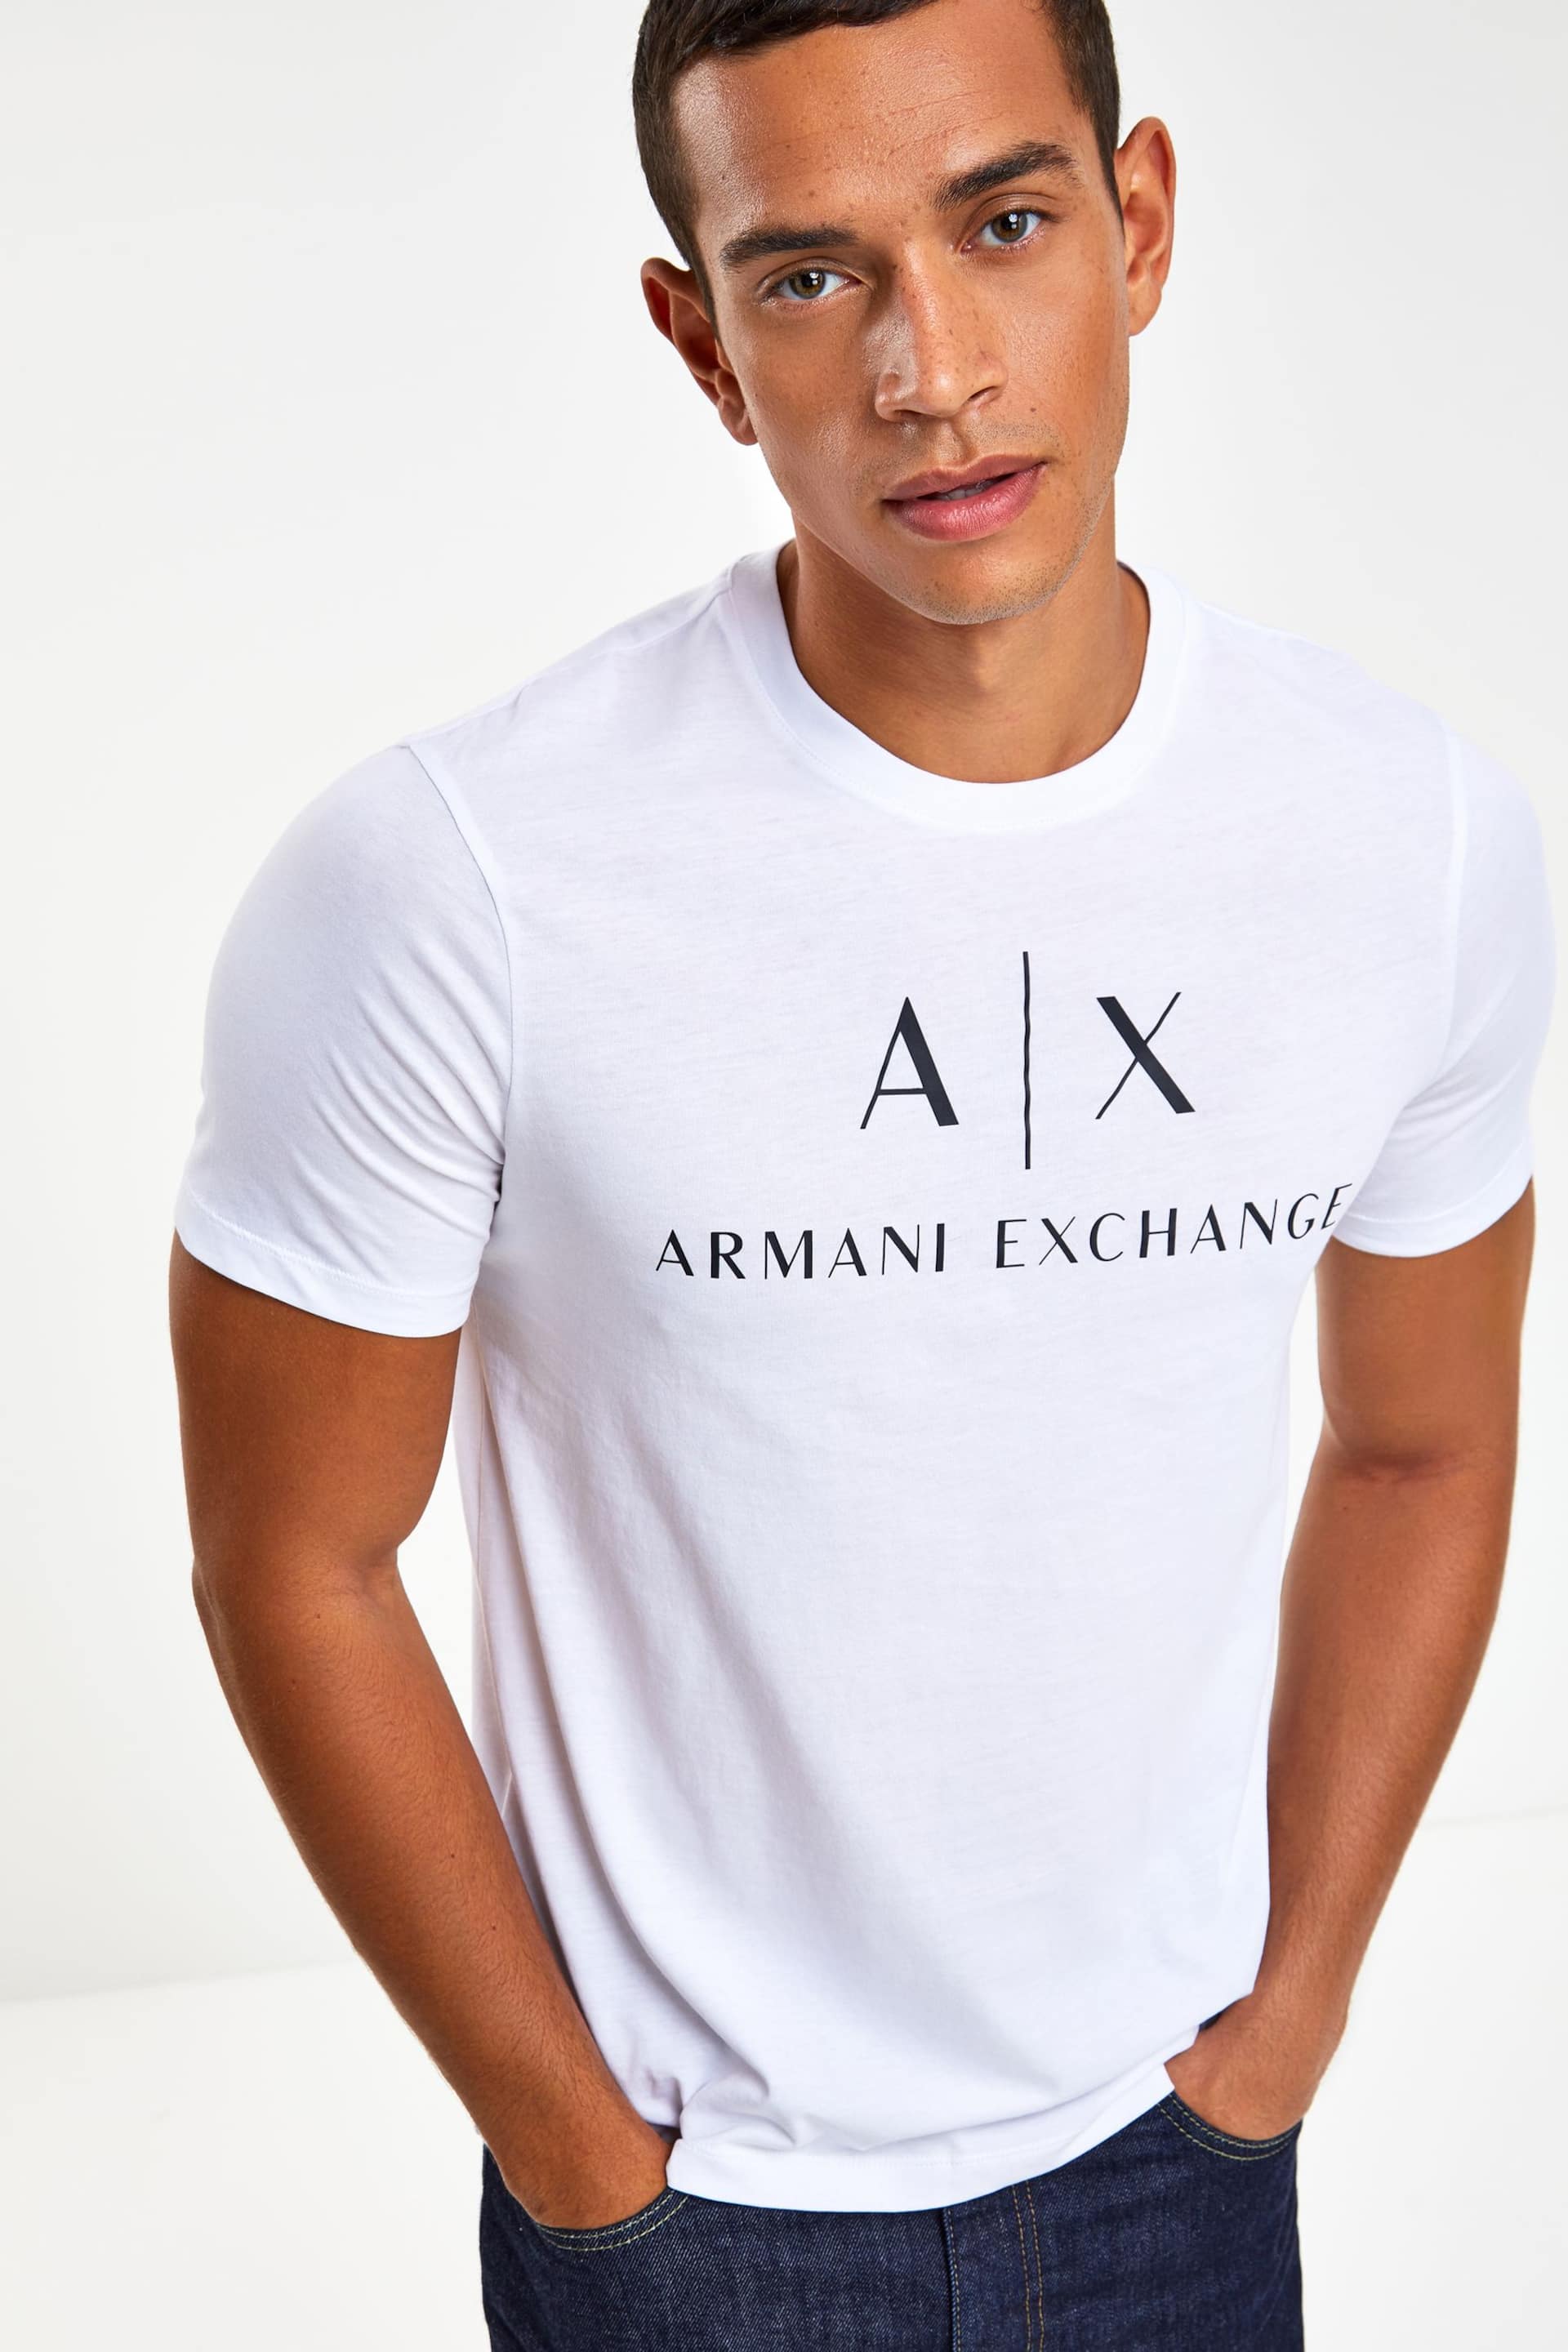 Armani Exchange Logo T-Shirt - Image 3 of 5